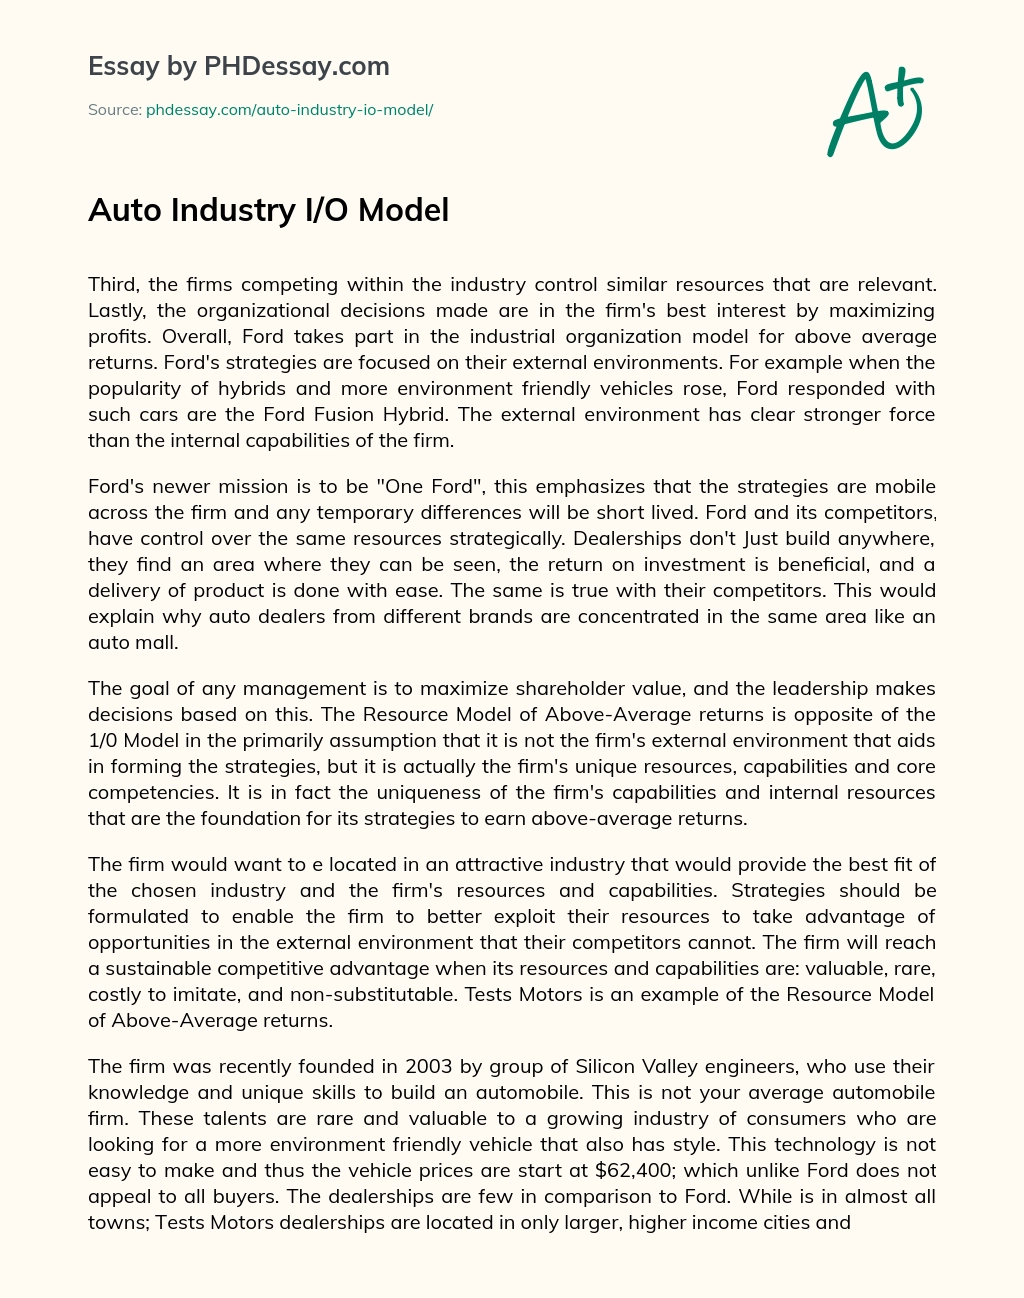 Ford’s Industrial Organization Model for Above Average Returns essay